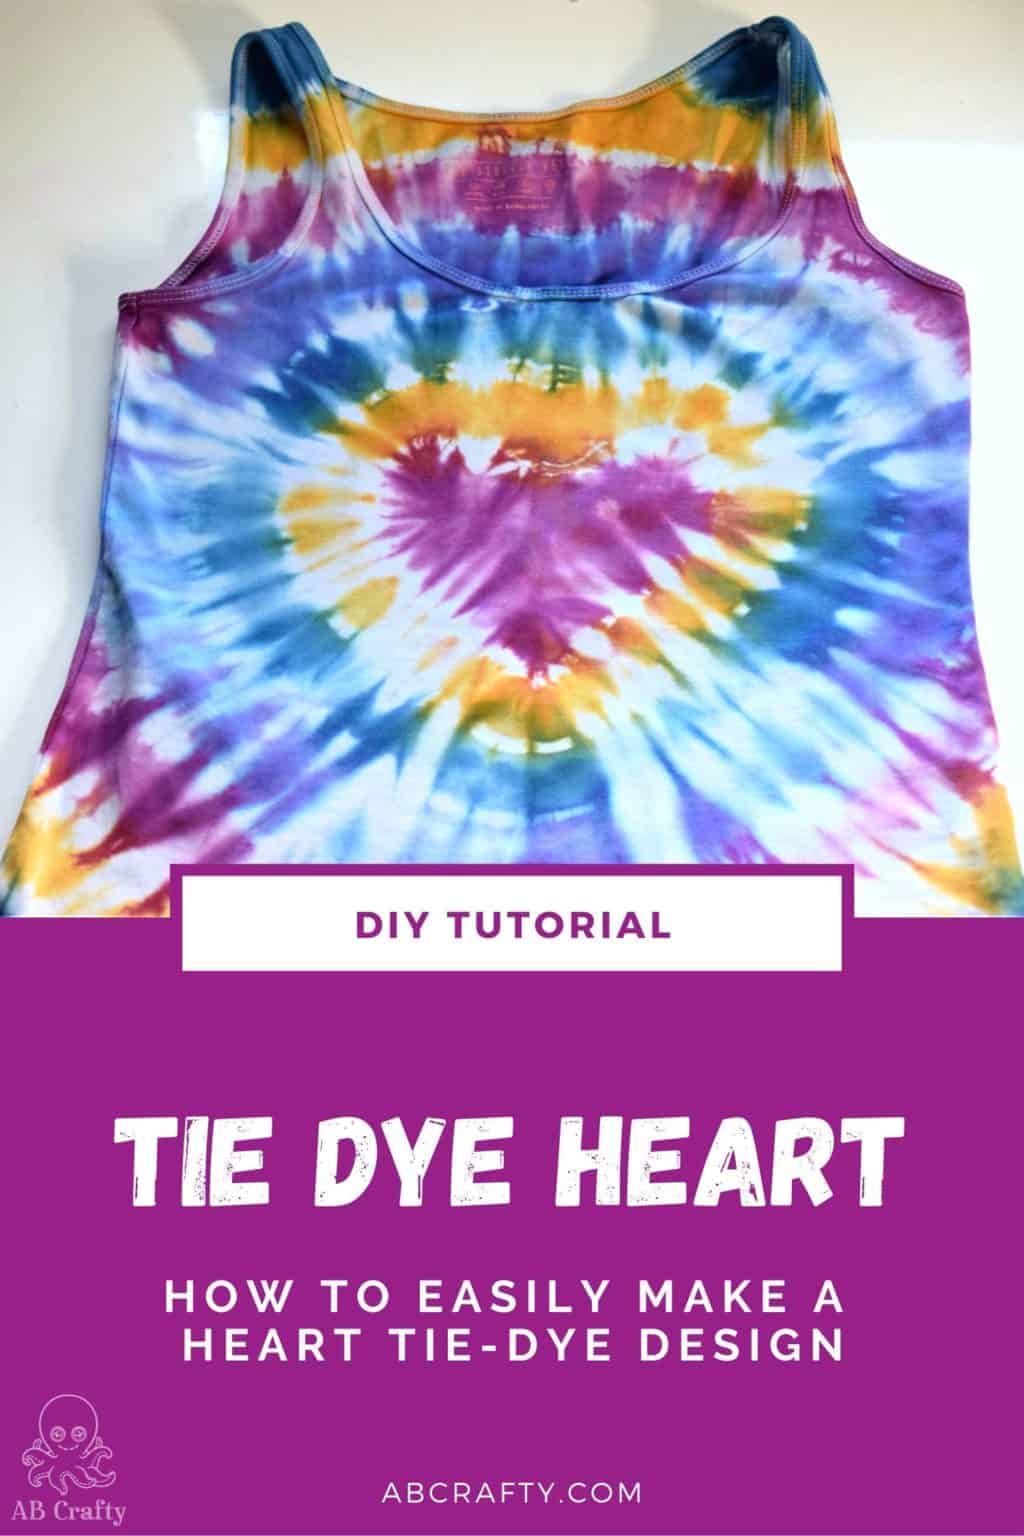 Tie Dye Designs: Making a Rainbow Heart Tie Dye Shirt With Black